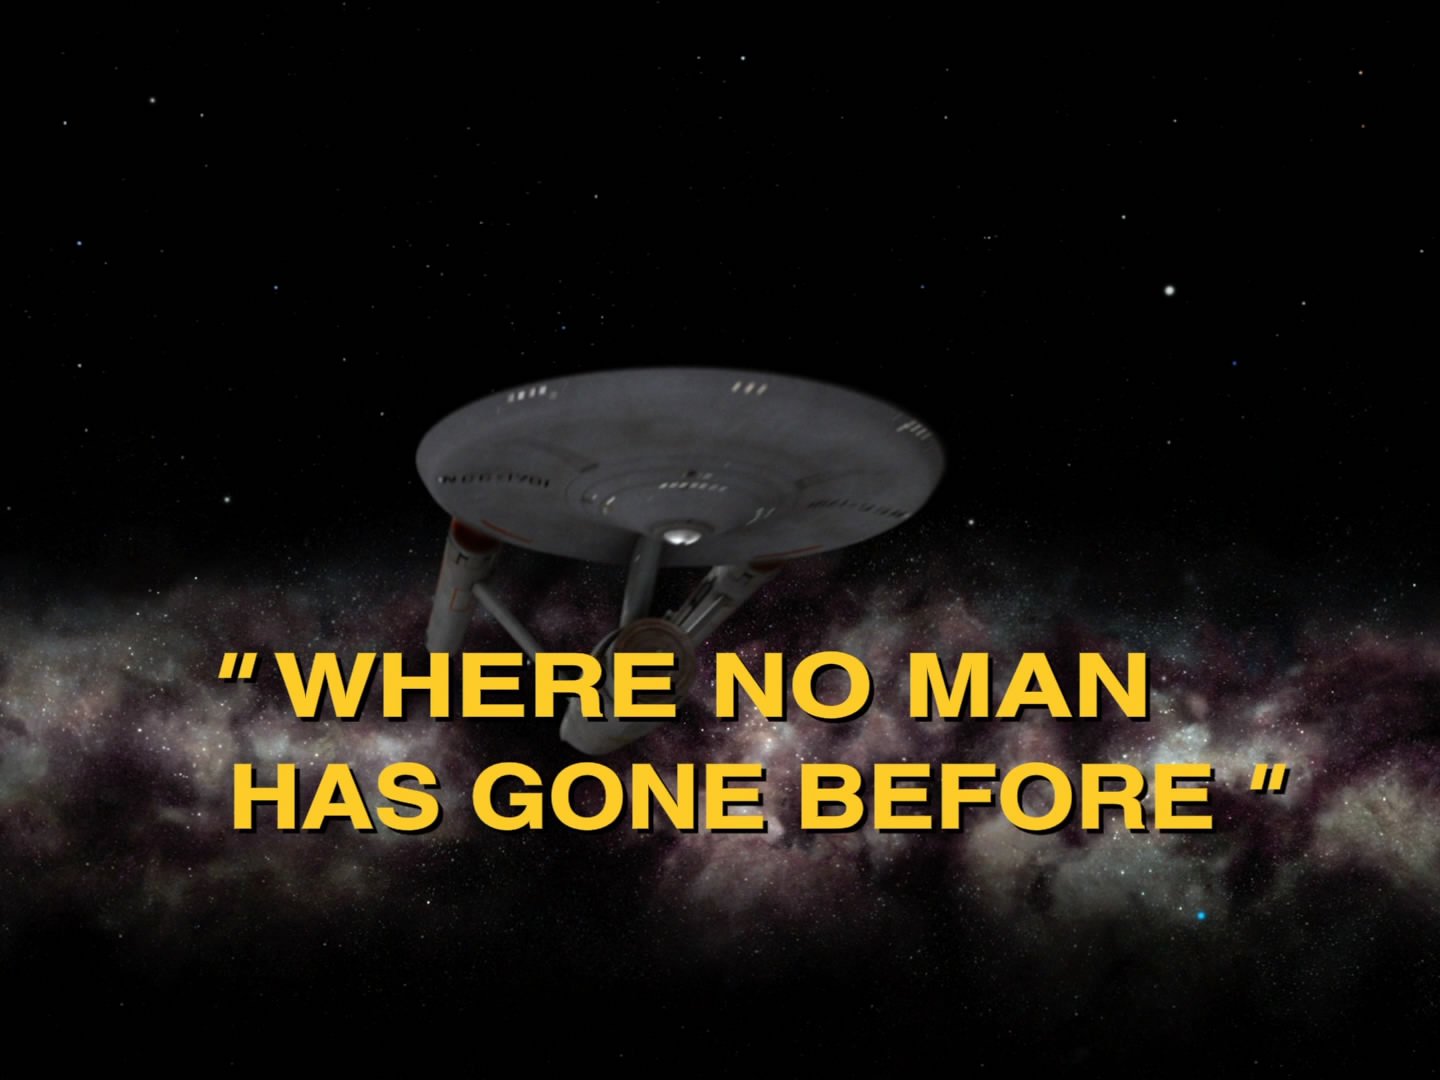 The opening title of 'Star Trek', Season 1, Episode 3